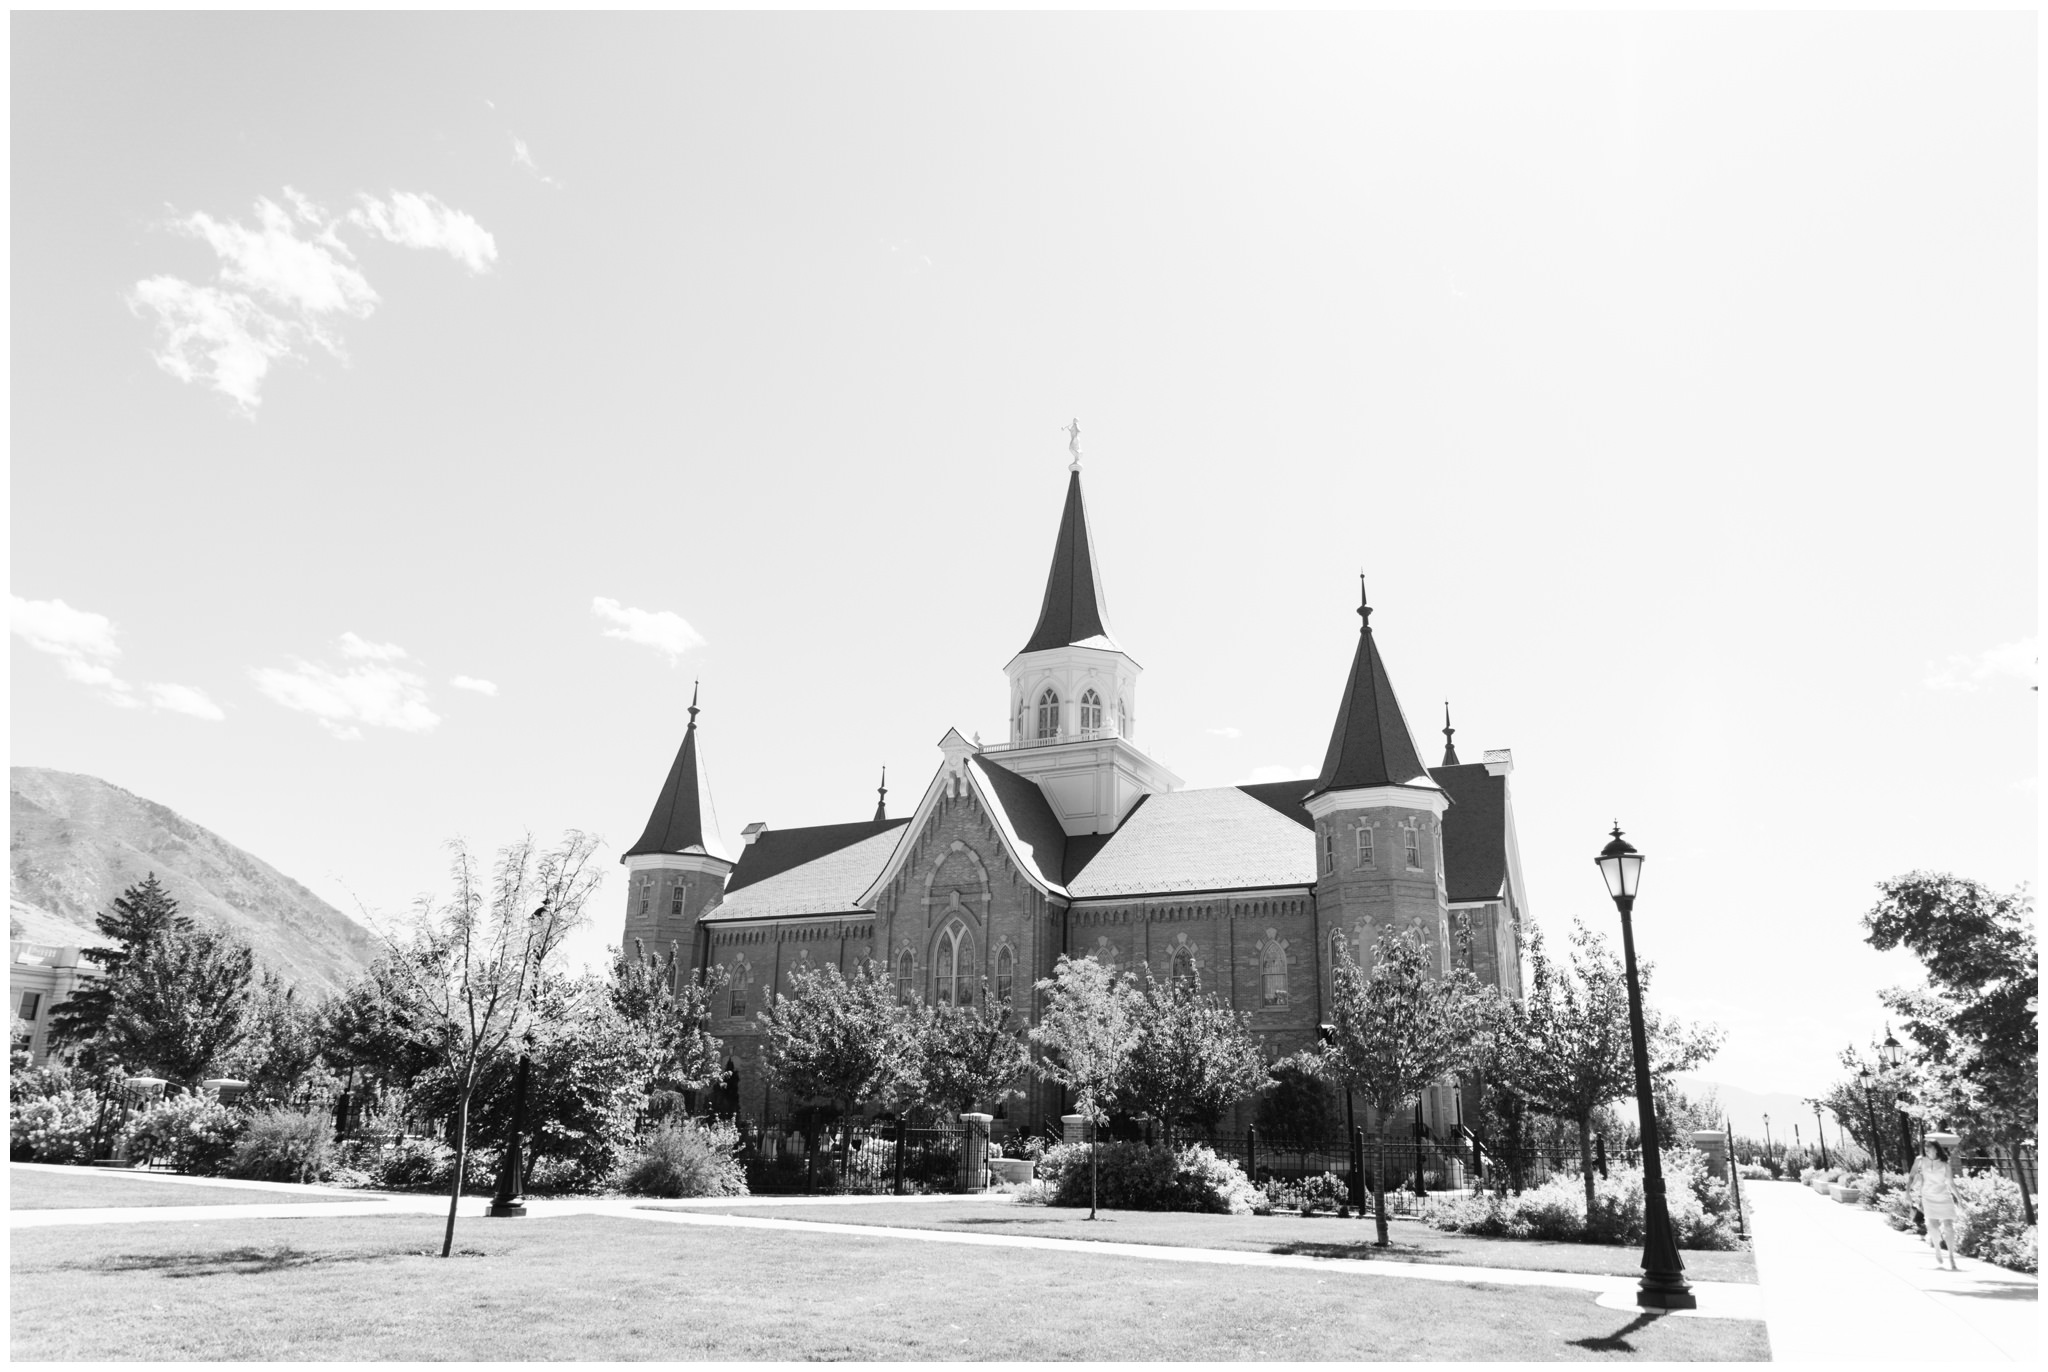 Black and white picture of the Provo City Center Temple in Provo, Utah